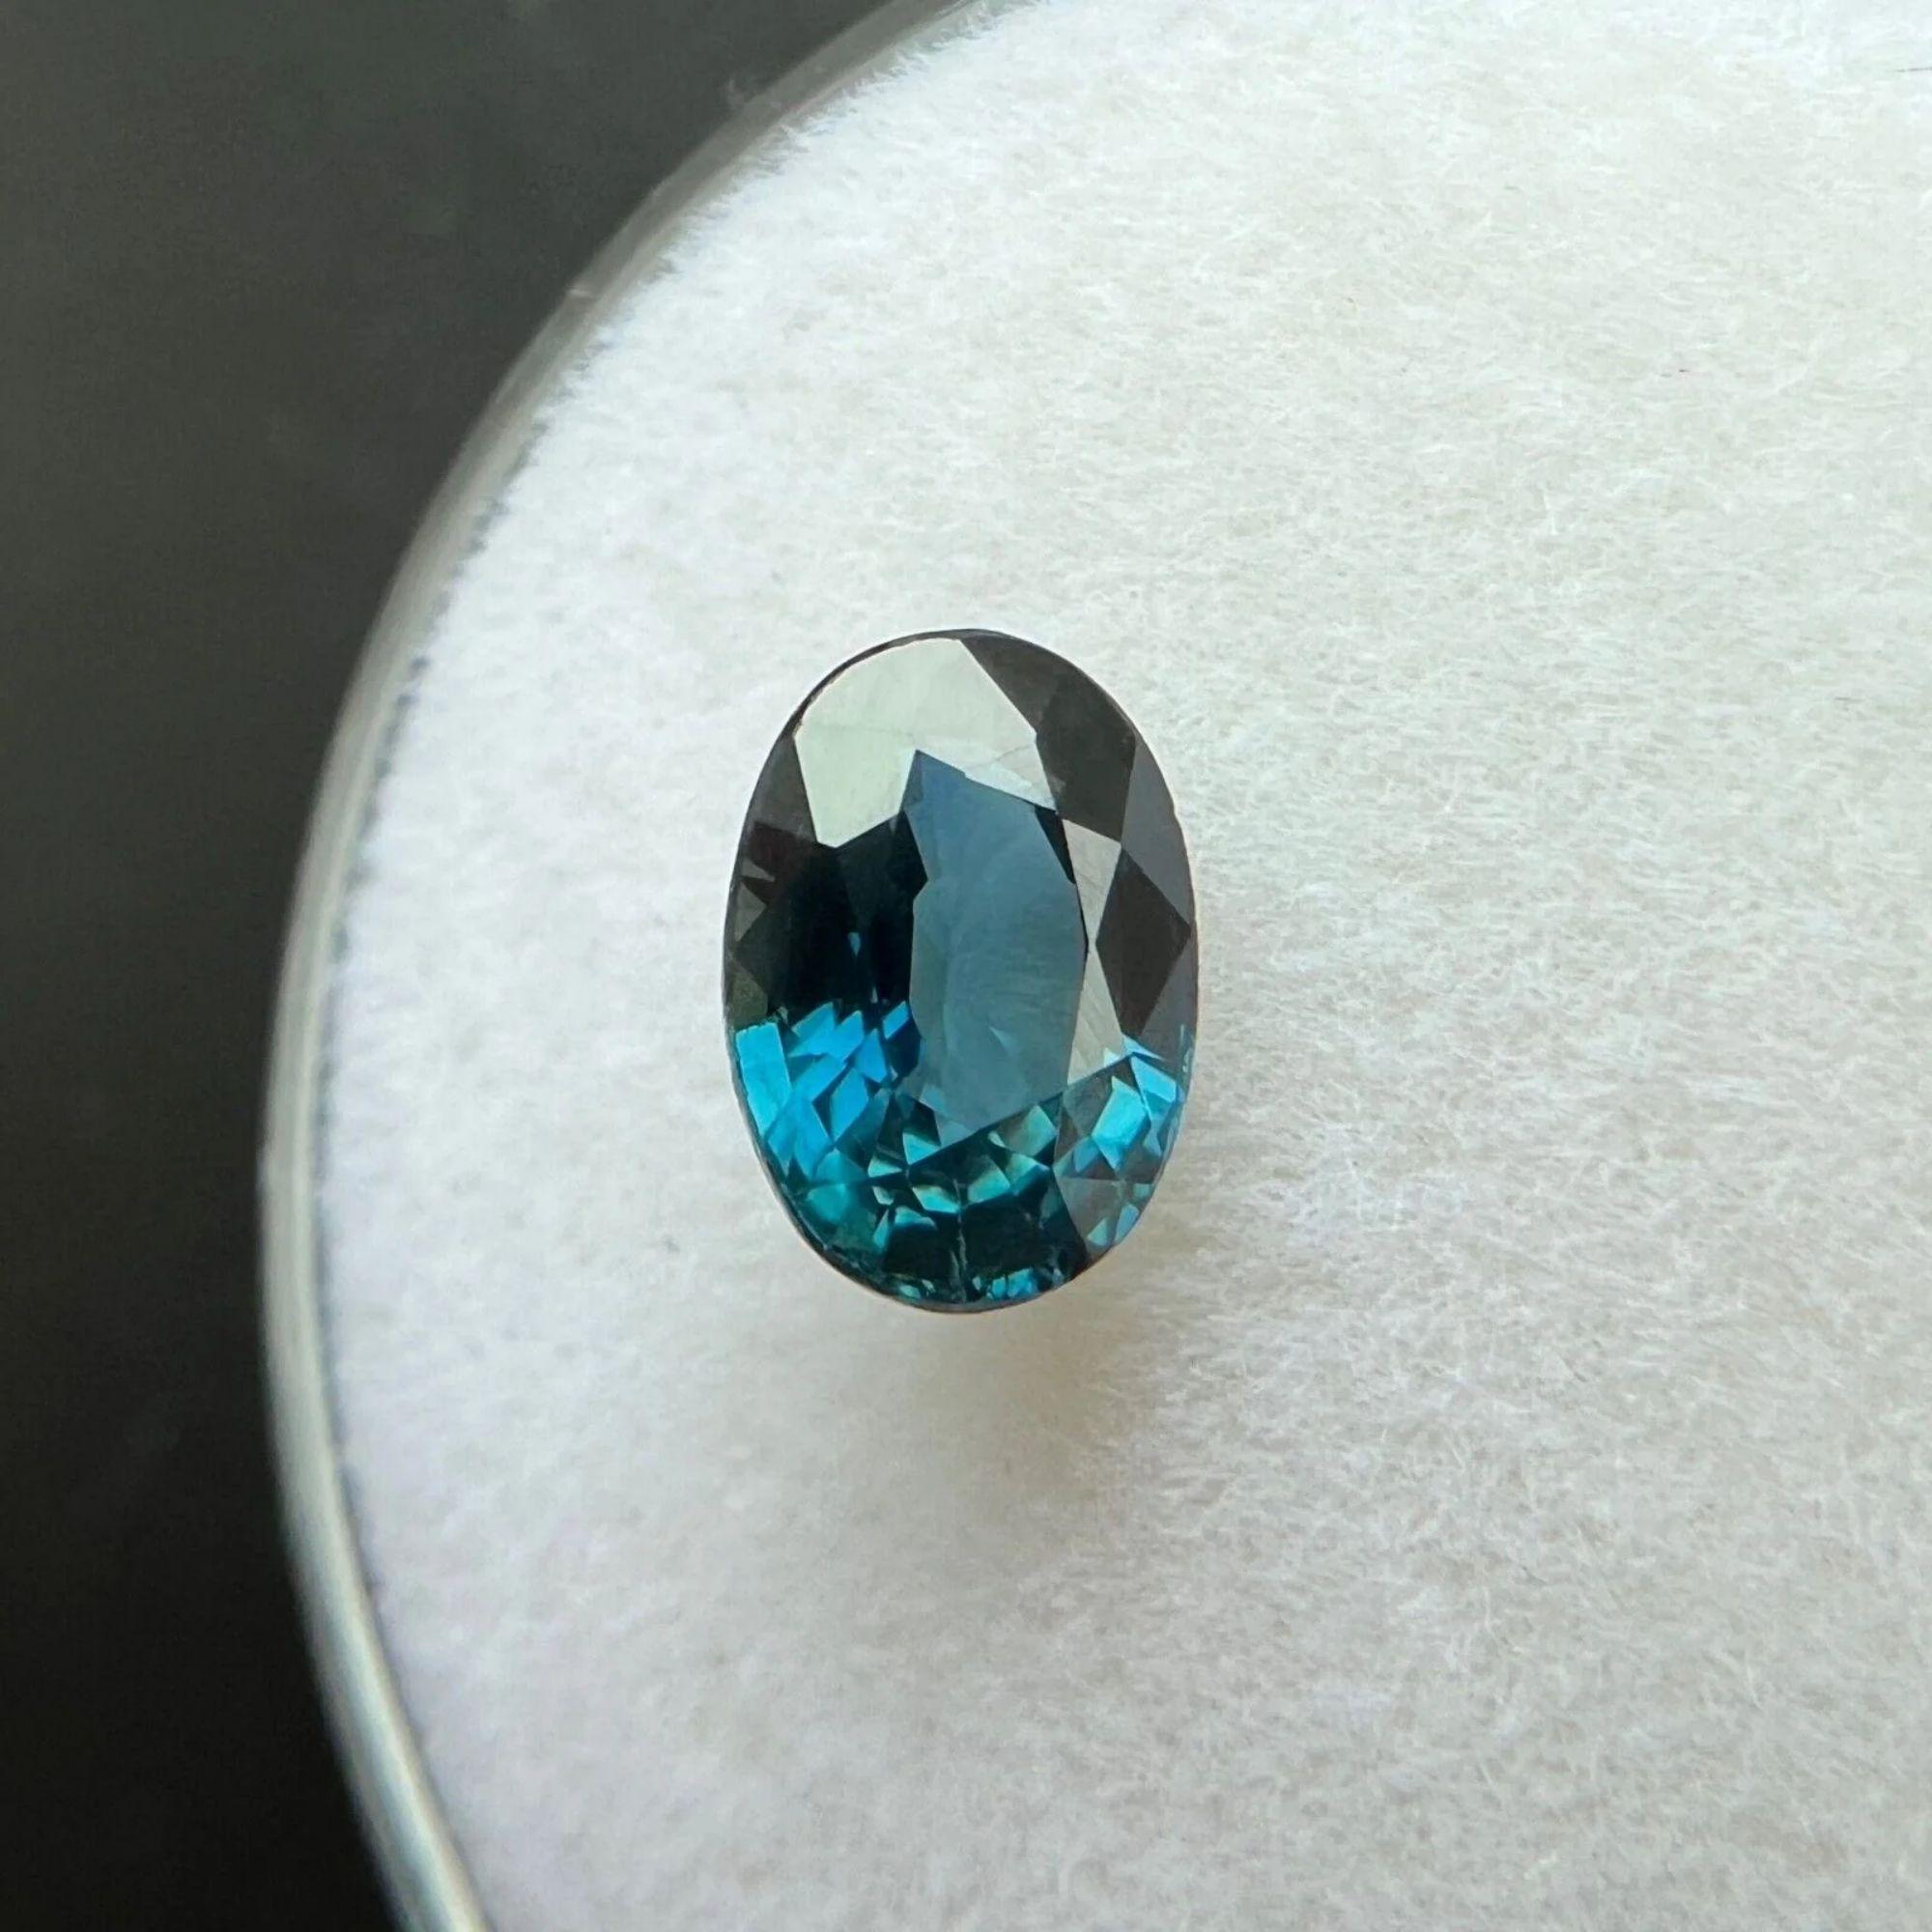 Pierre précieuse rare saphir bleu profond de taille ovale non traitée de 1,14 carat, certifiée GIA Unisexe en vente